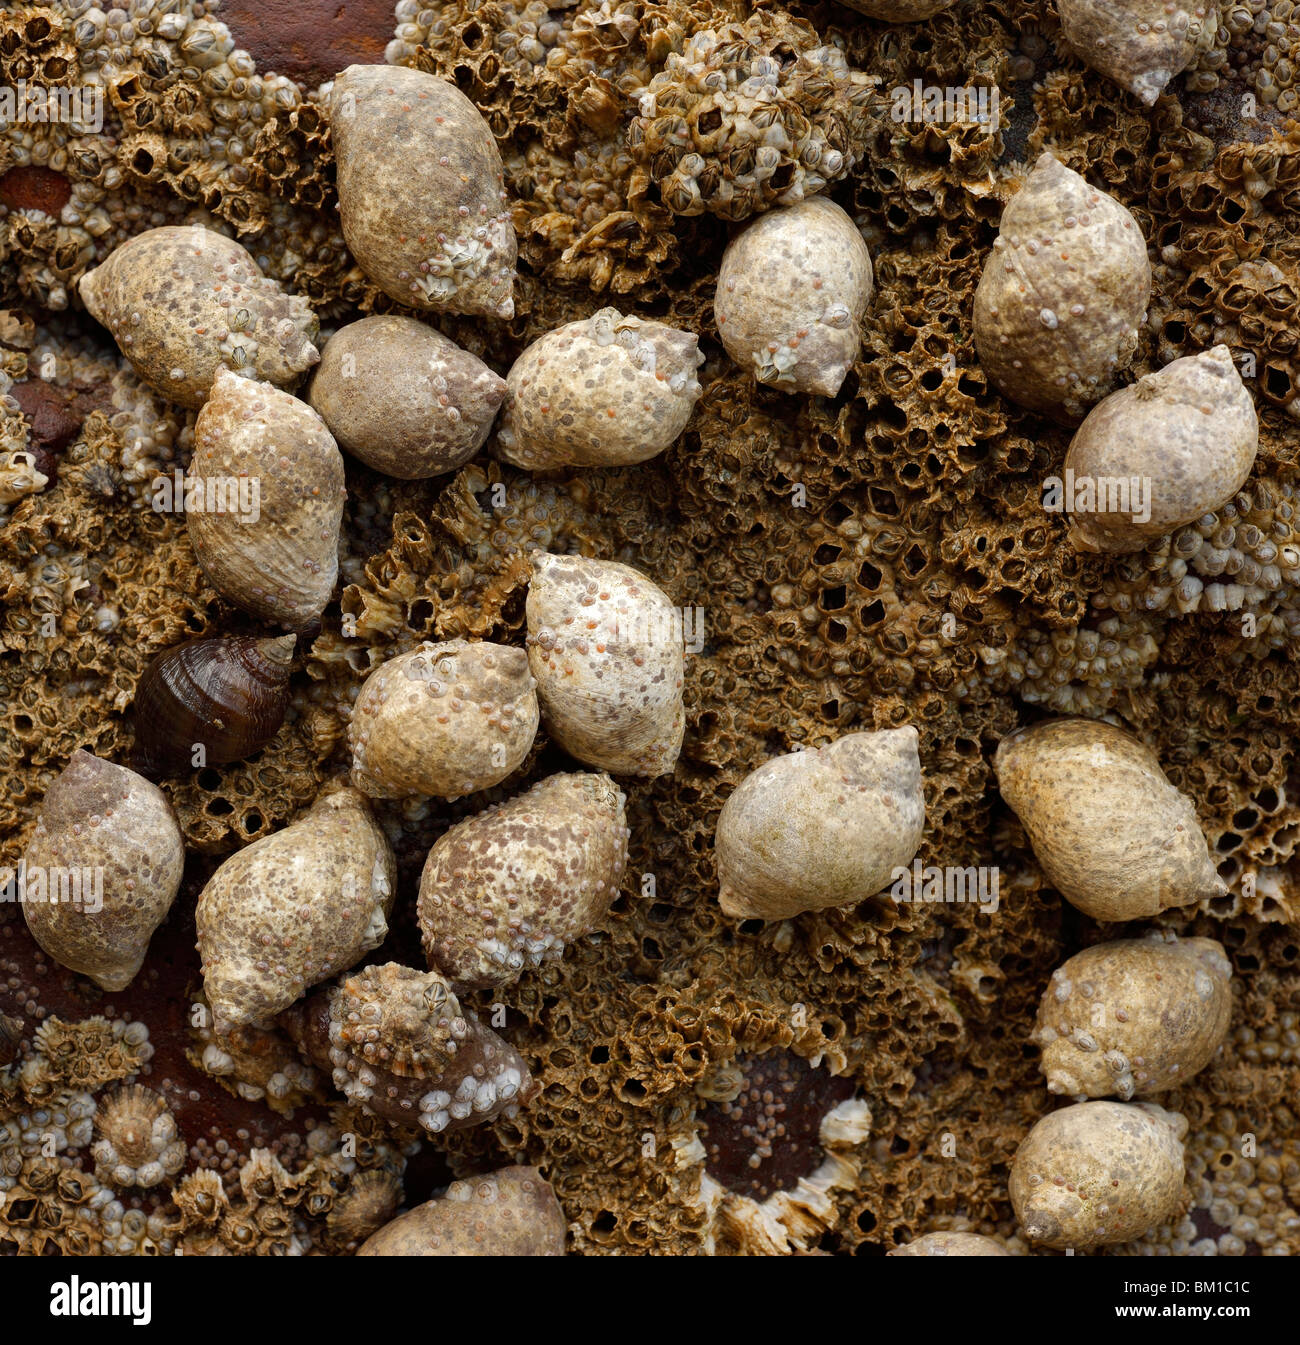 Clúster de caracoles marinos. Foto de stock